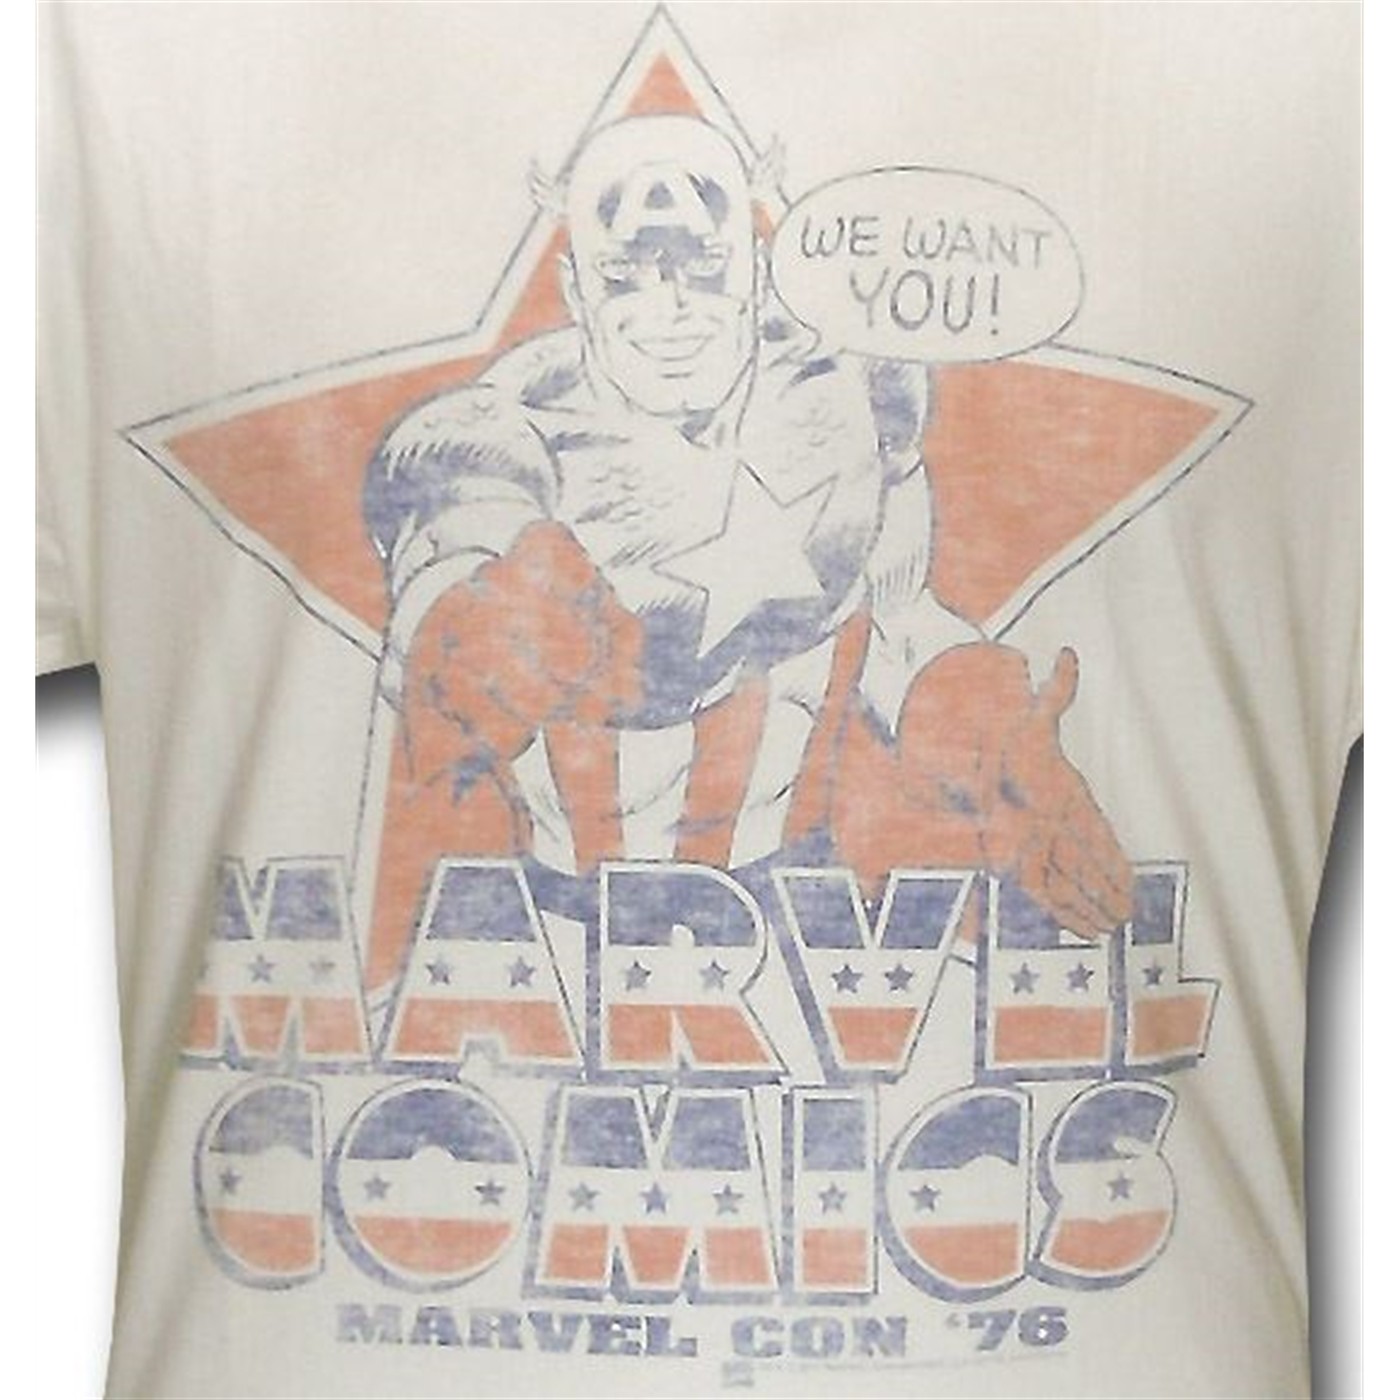 Marvel Wants You! Junk Food T-Shirt